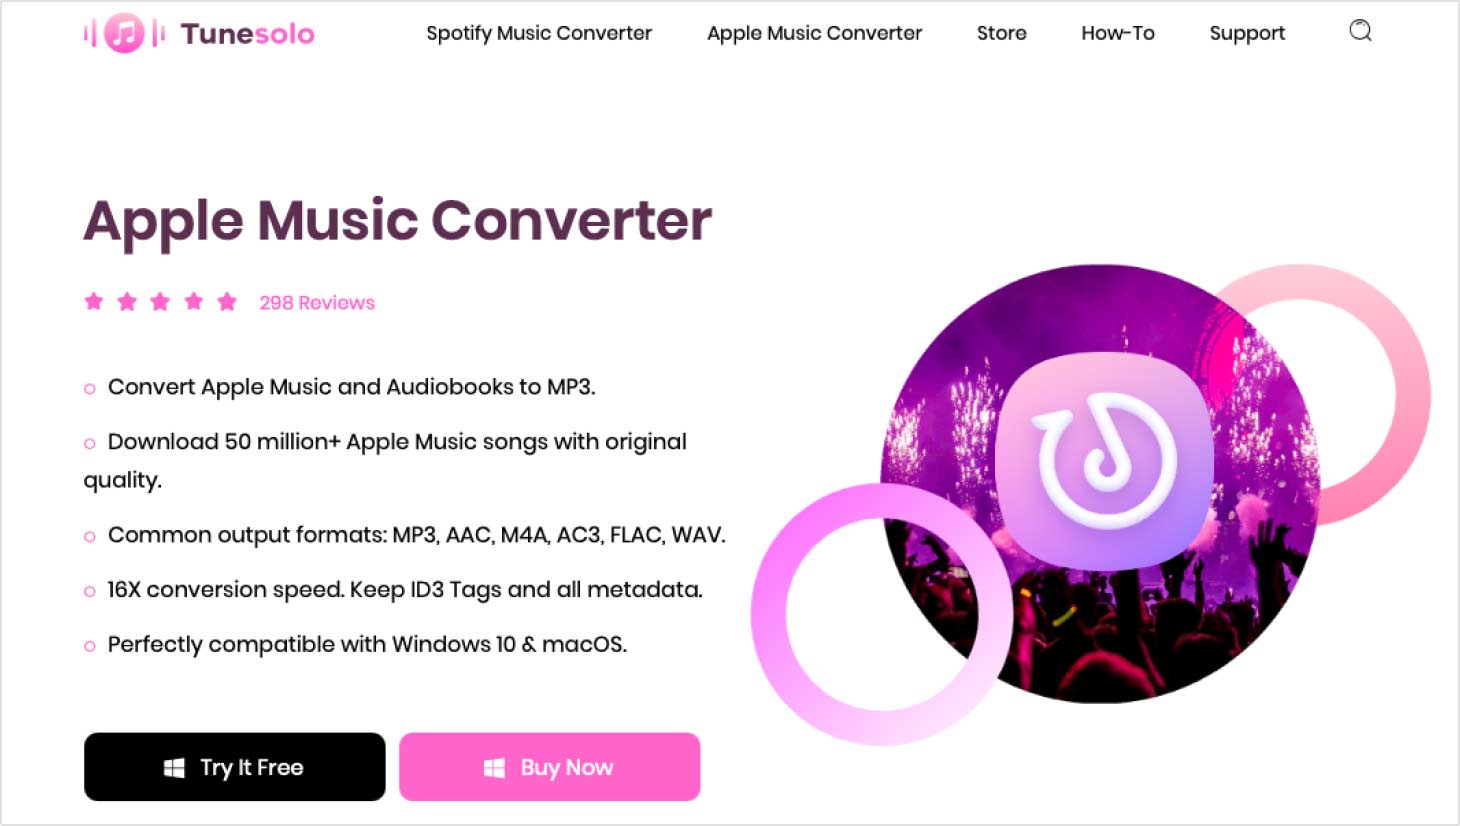 Advantages of TuneSolo Apple Music Converter